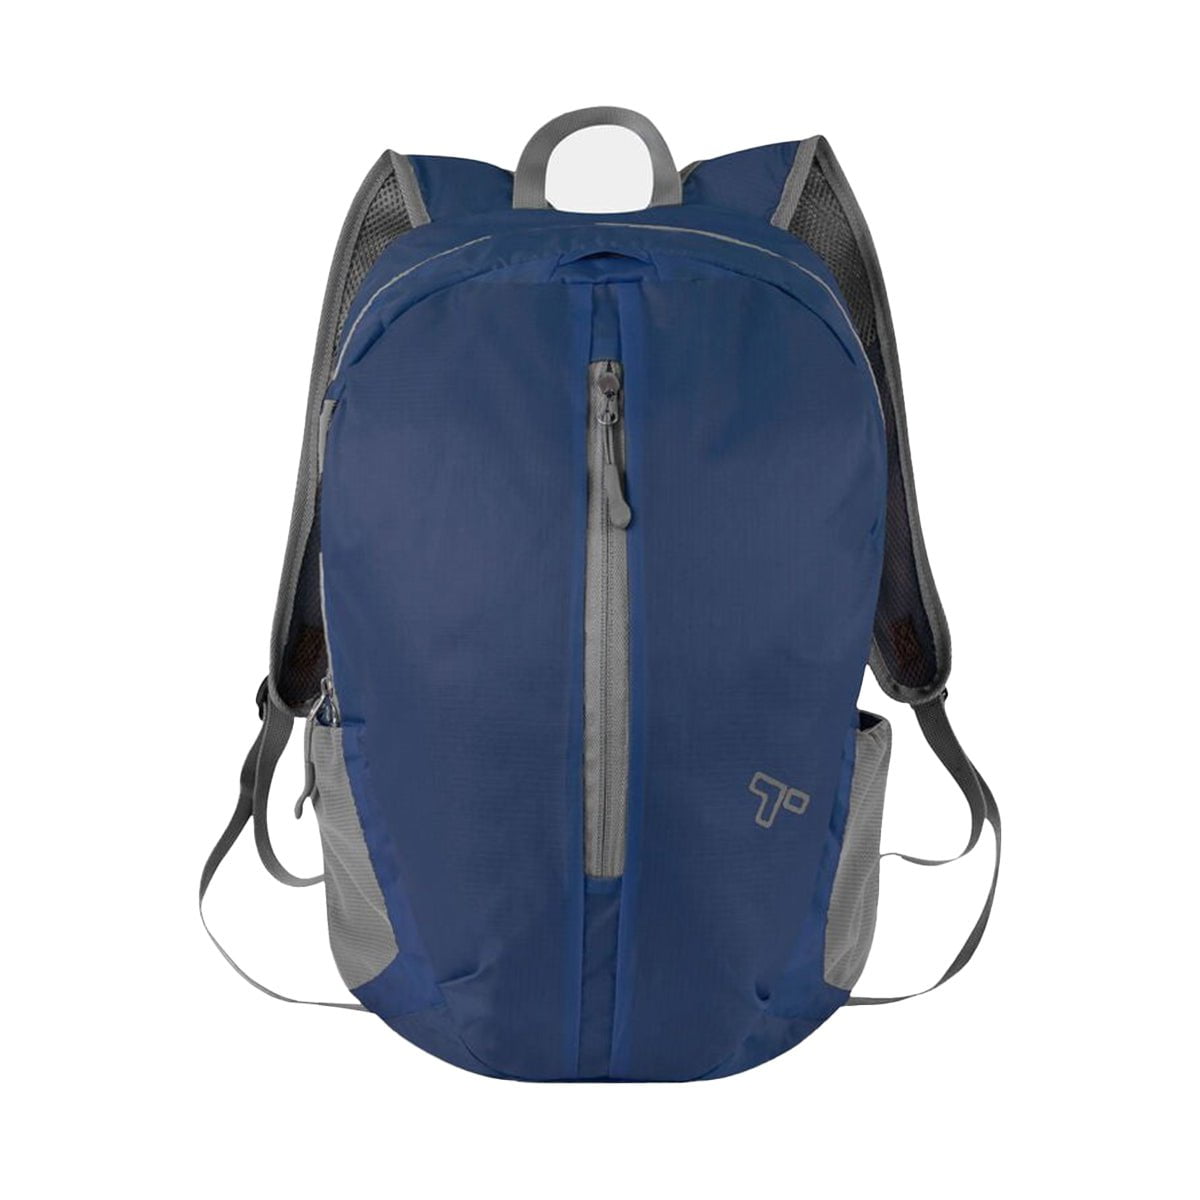 Travelon Packable Backpack - Royal Blue